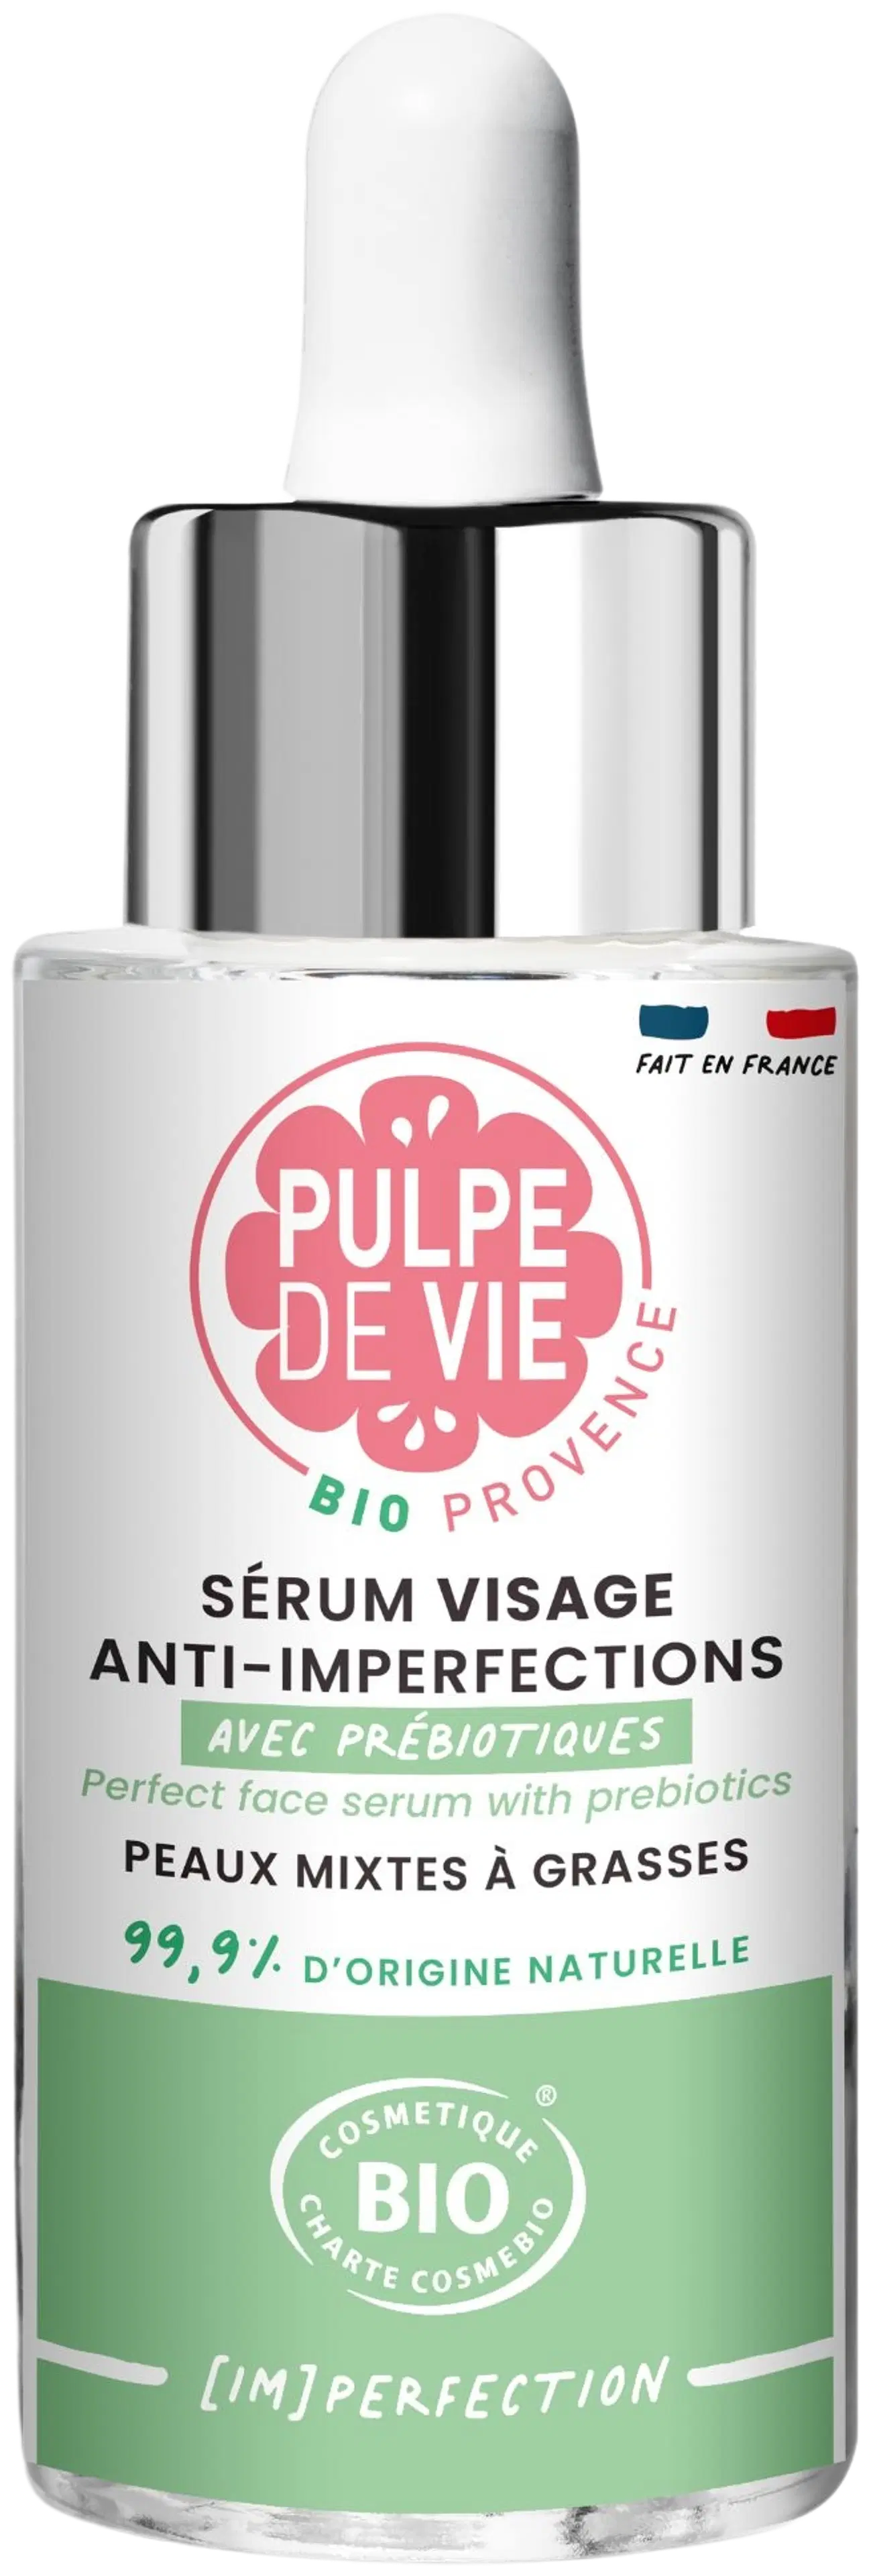 Pulpe De Vie No Filter prebioottinen kasvoseerumi 30ml